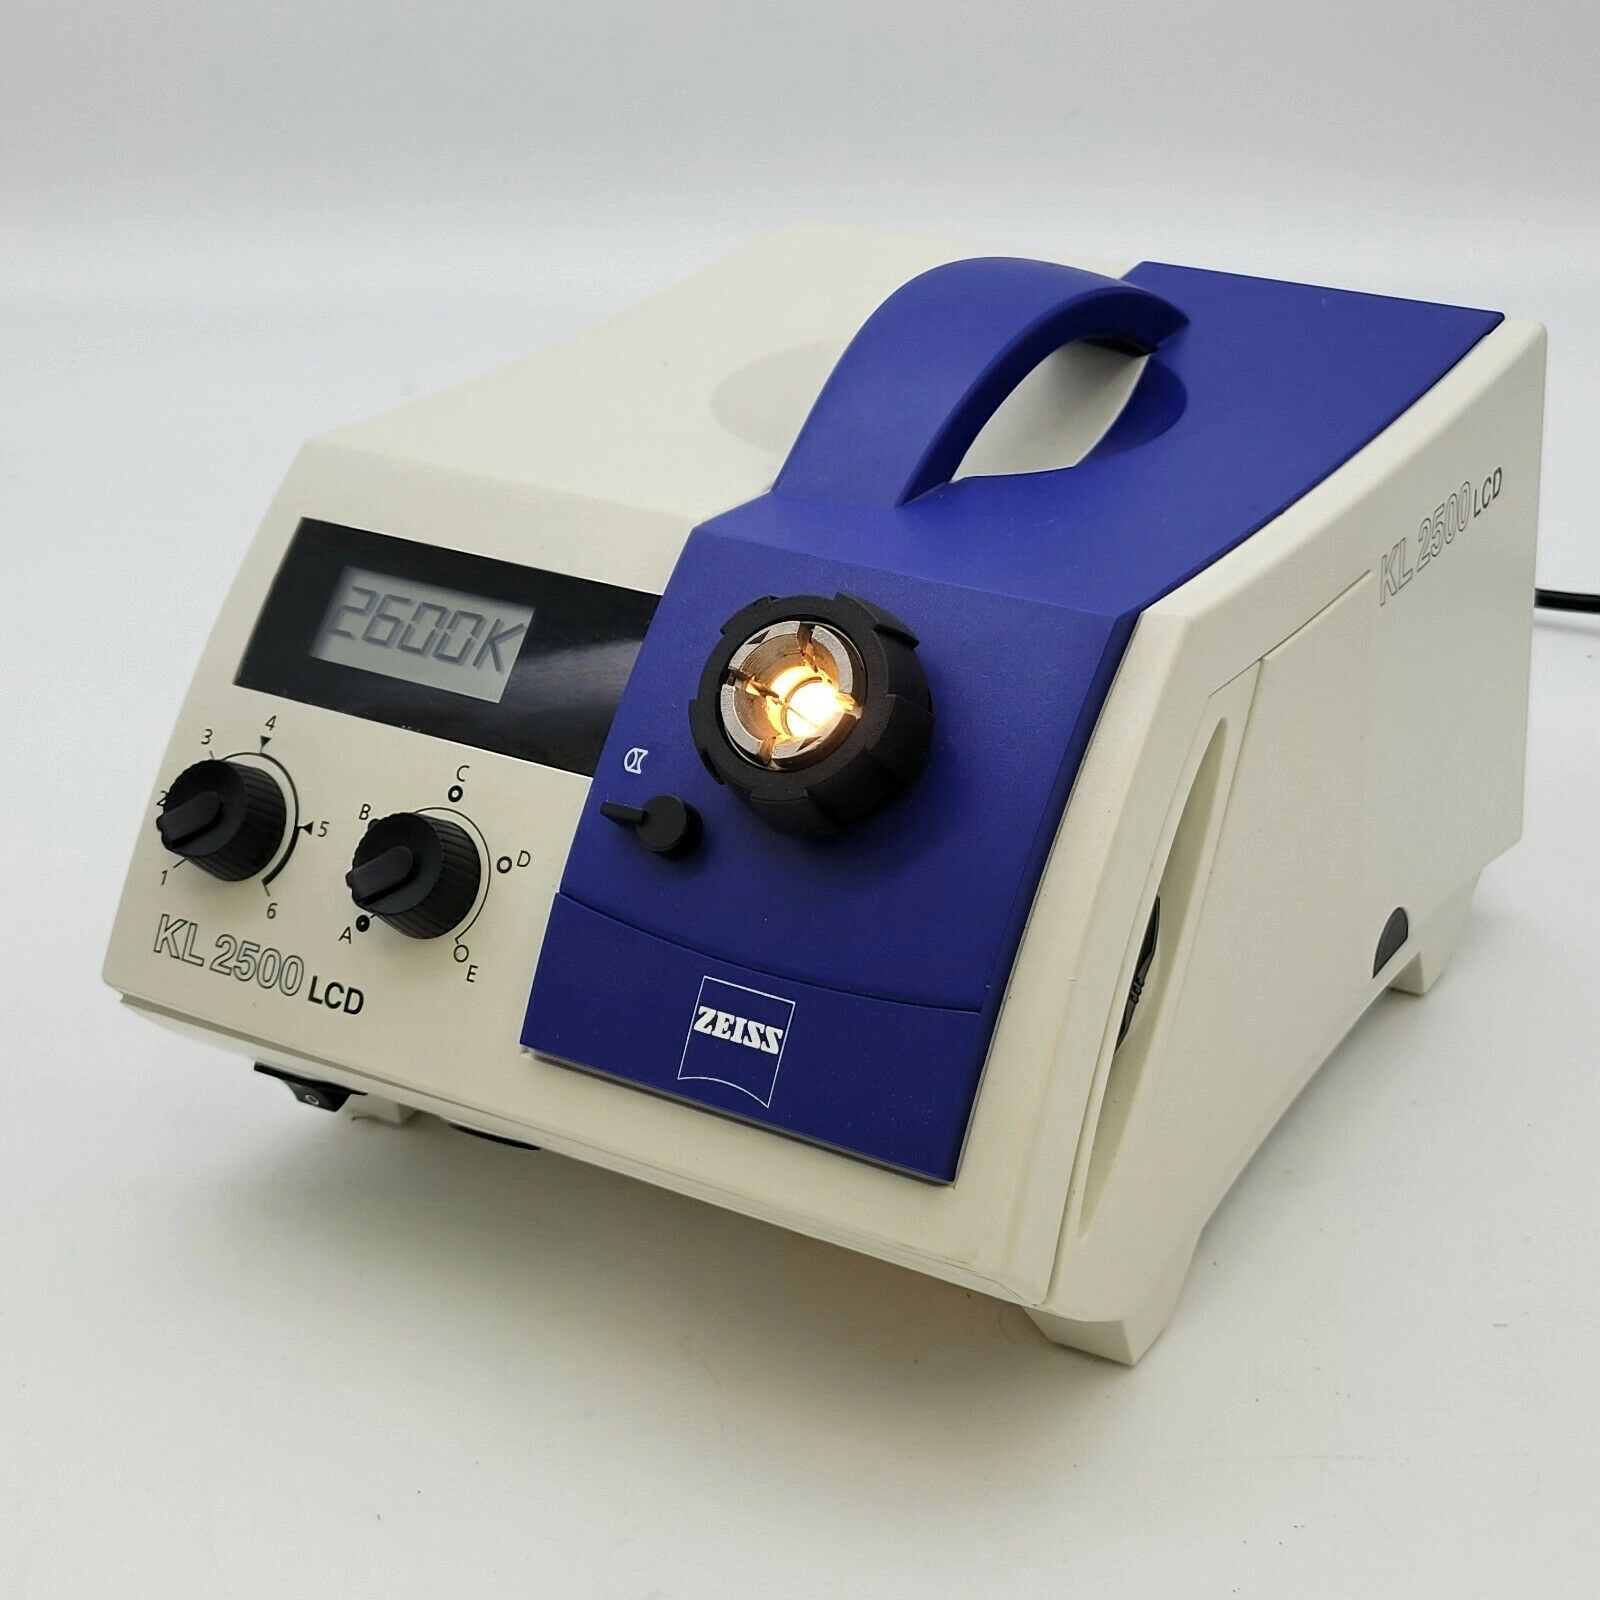 Zeiss Schott KL 2500 LCD Stereo Microscope Halogen Light Source